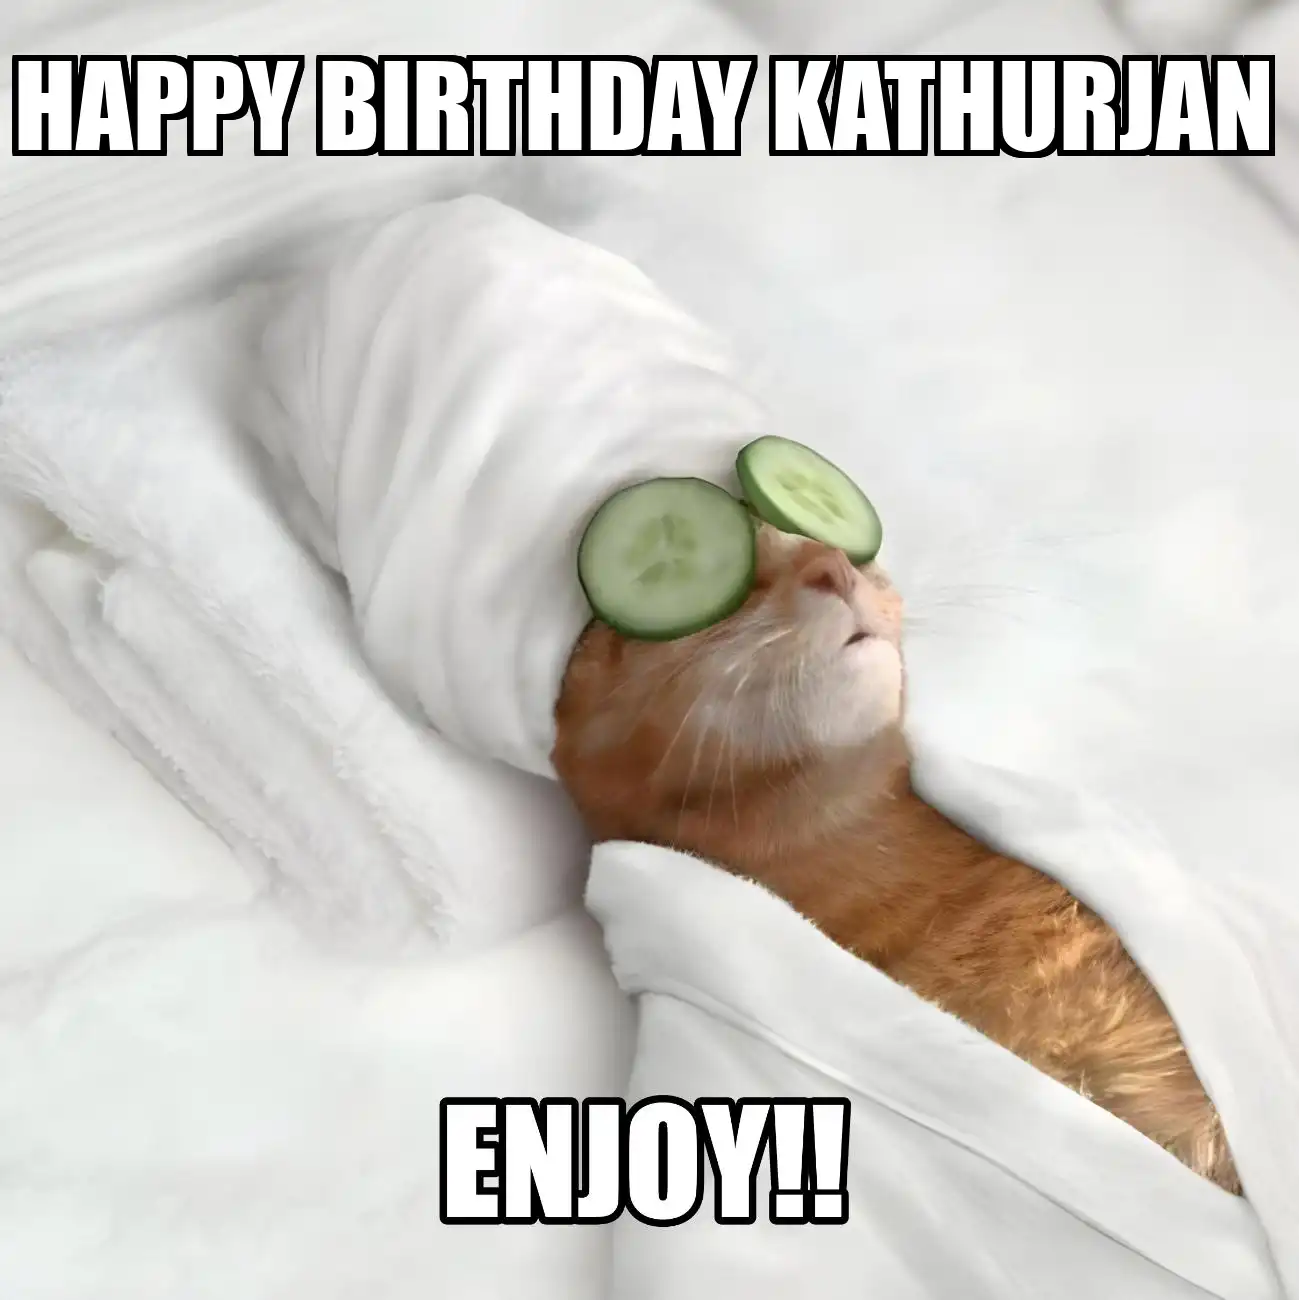 Happy Birthday Kathurjan Enjoy Cat Meme